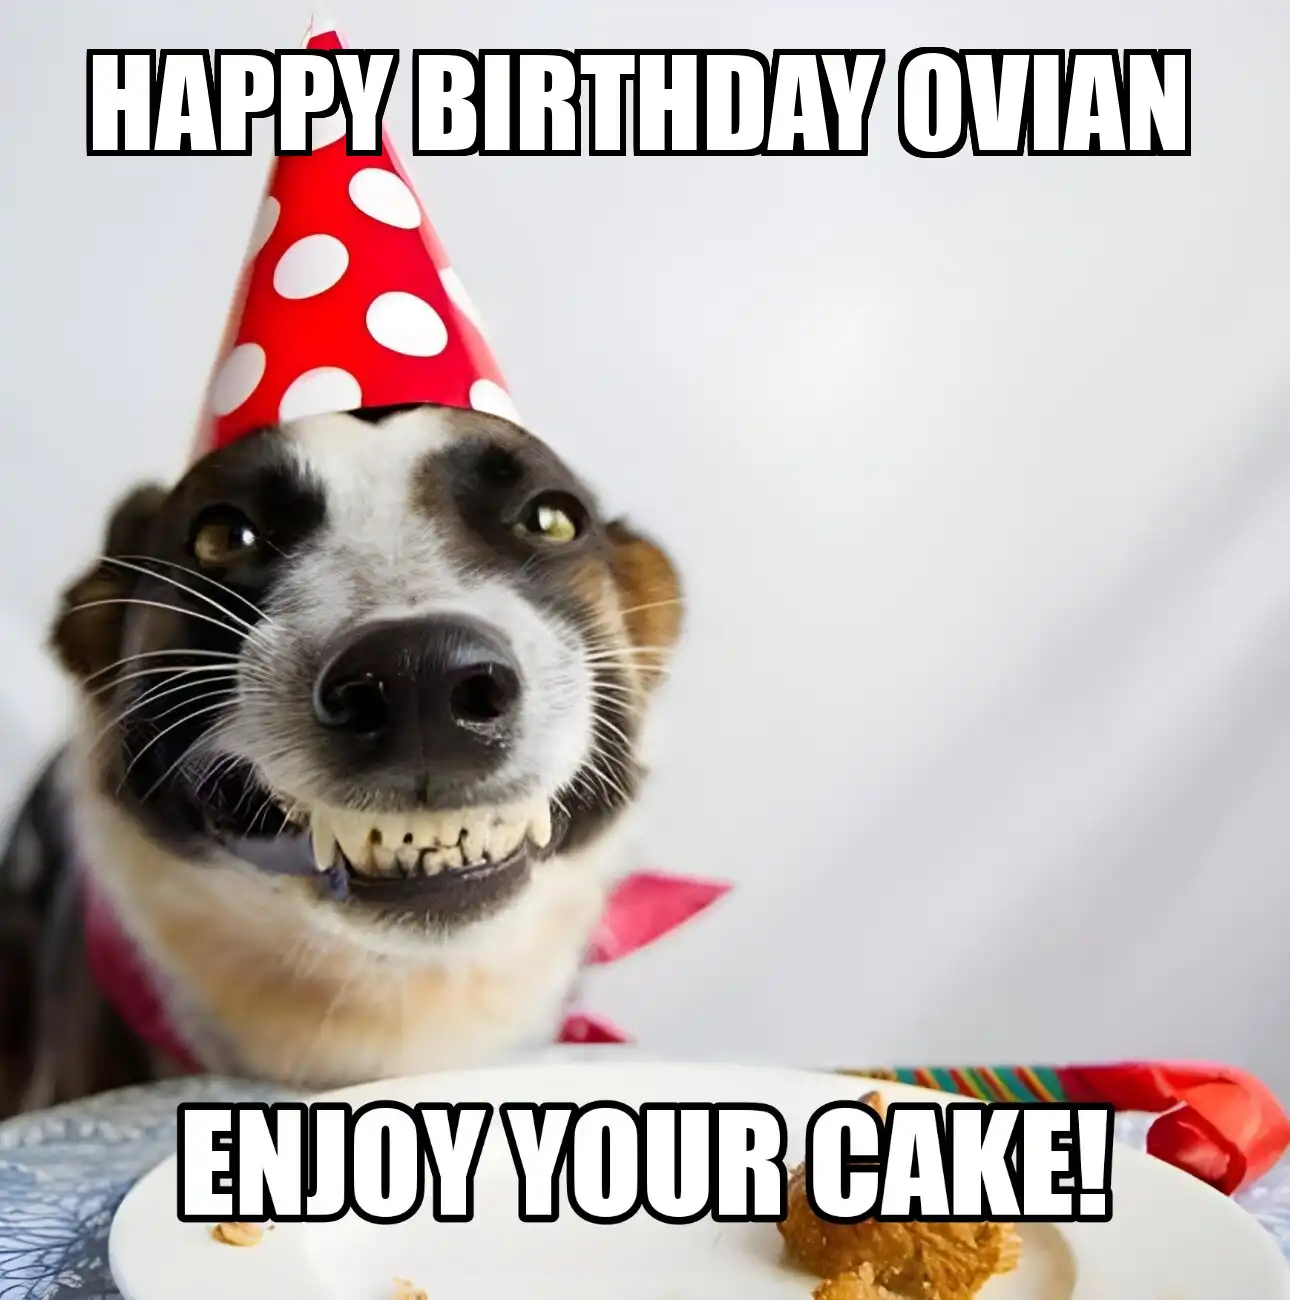 Happy Birthday Ovian Enjoy Your Cake Dog Meme